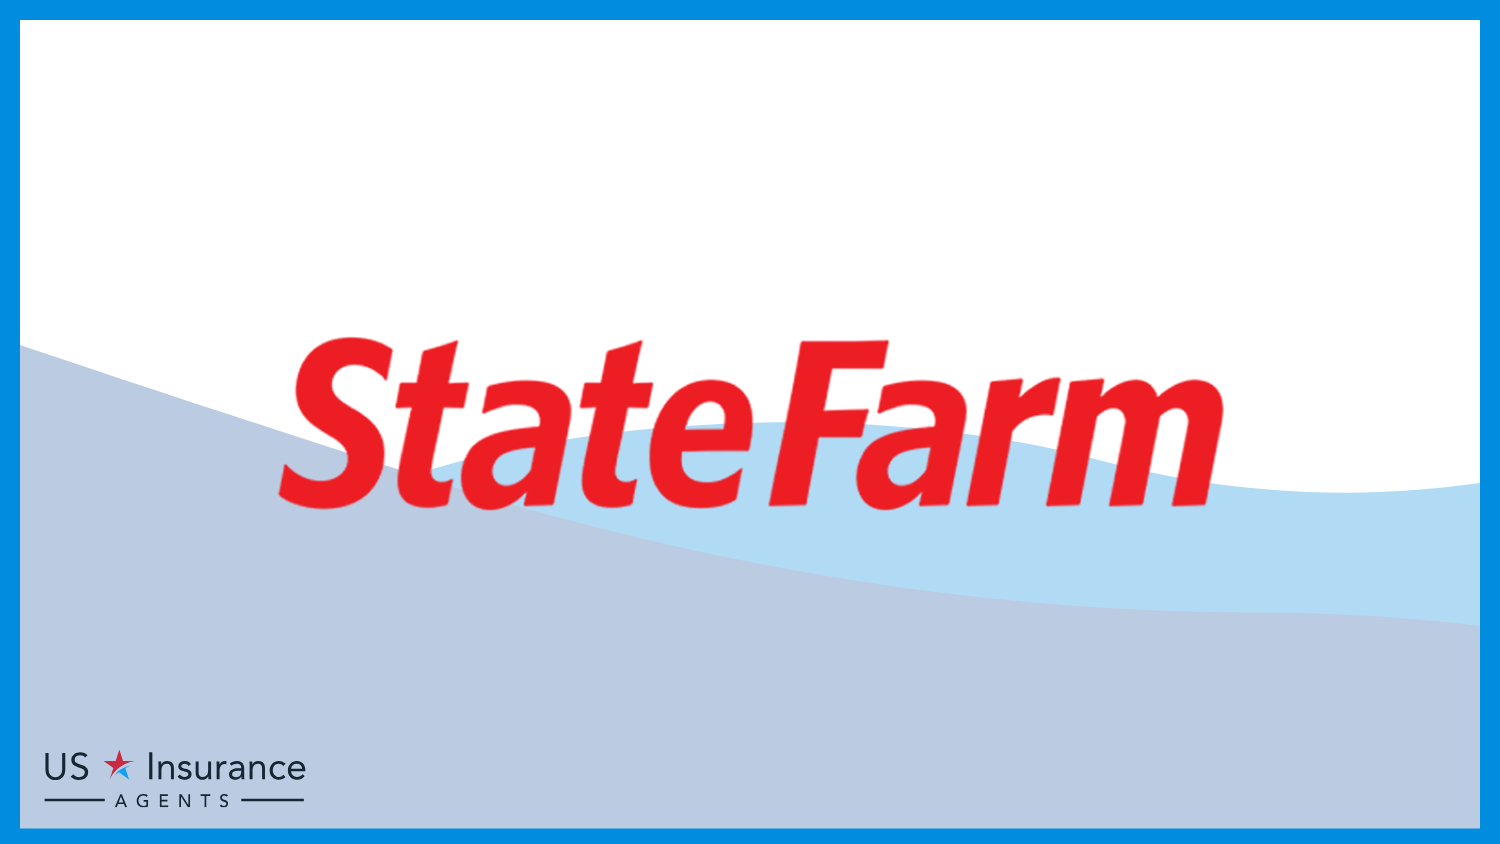 State Farm Provider Header Image